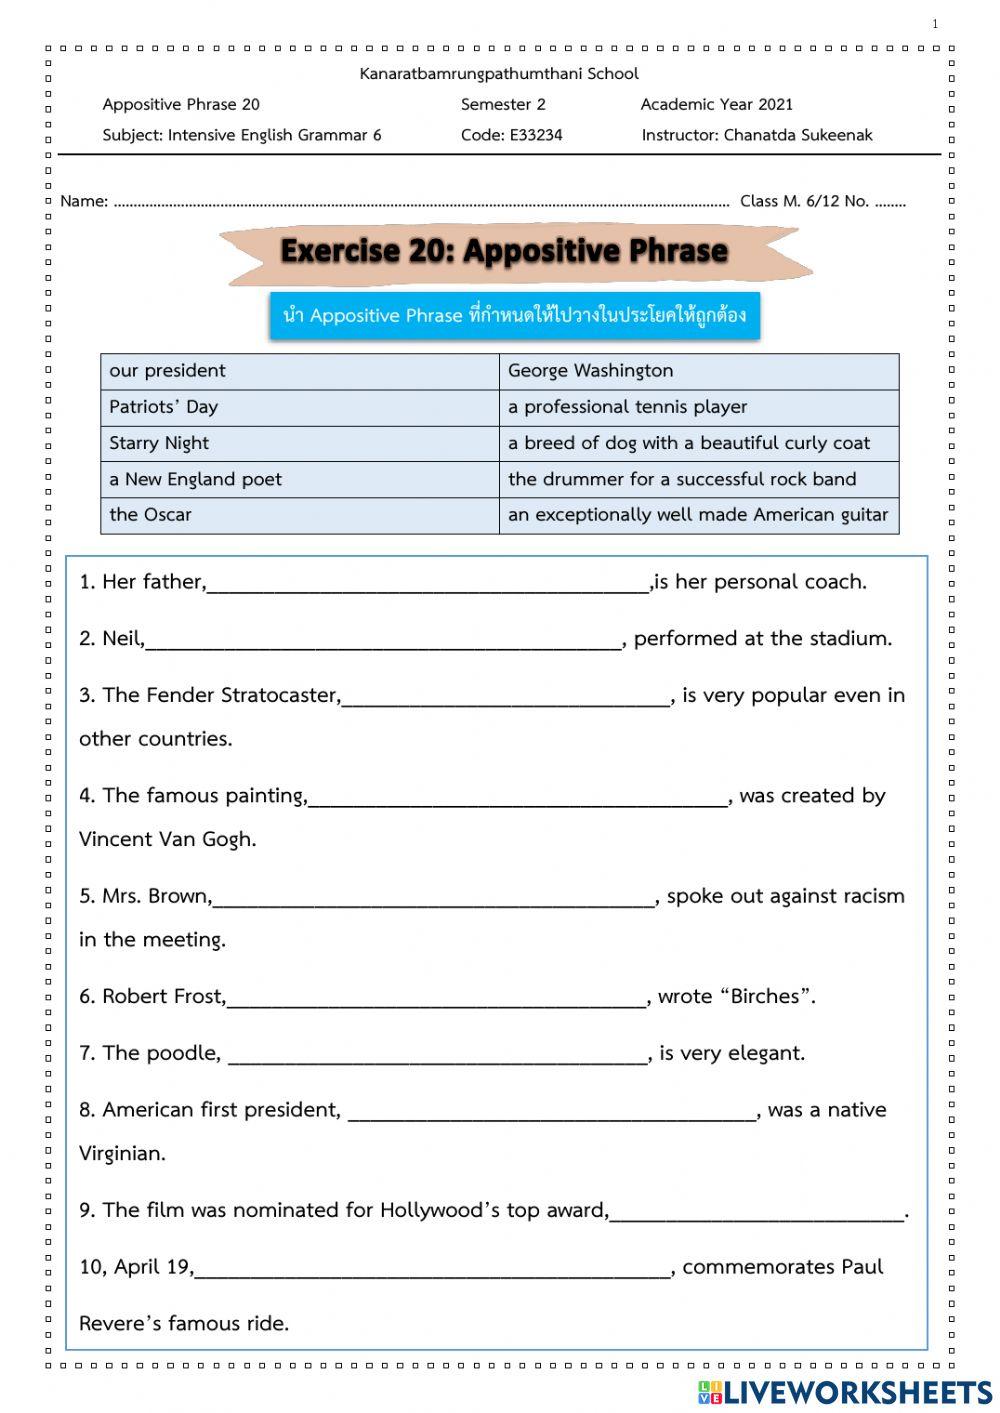 Exercise 20: Appositive Phrase